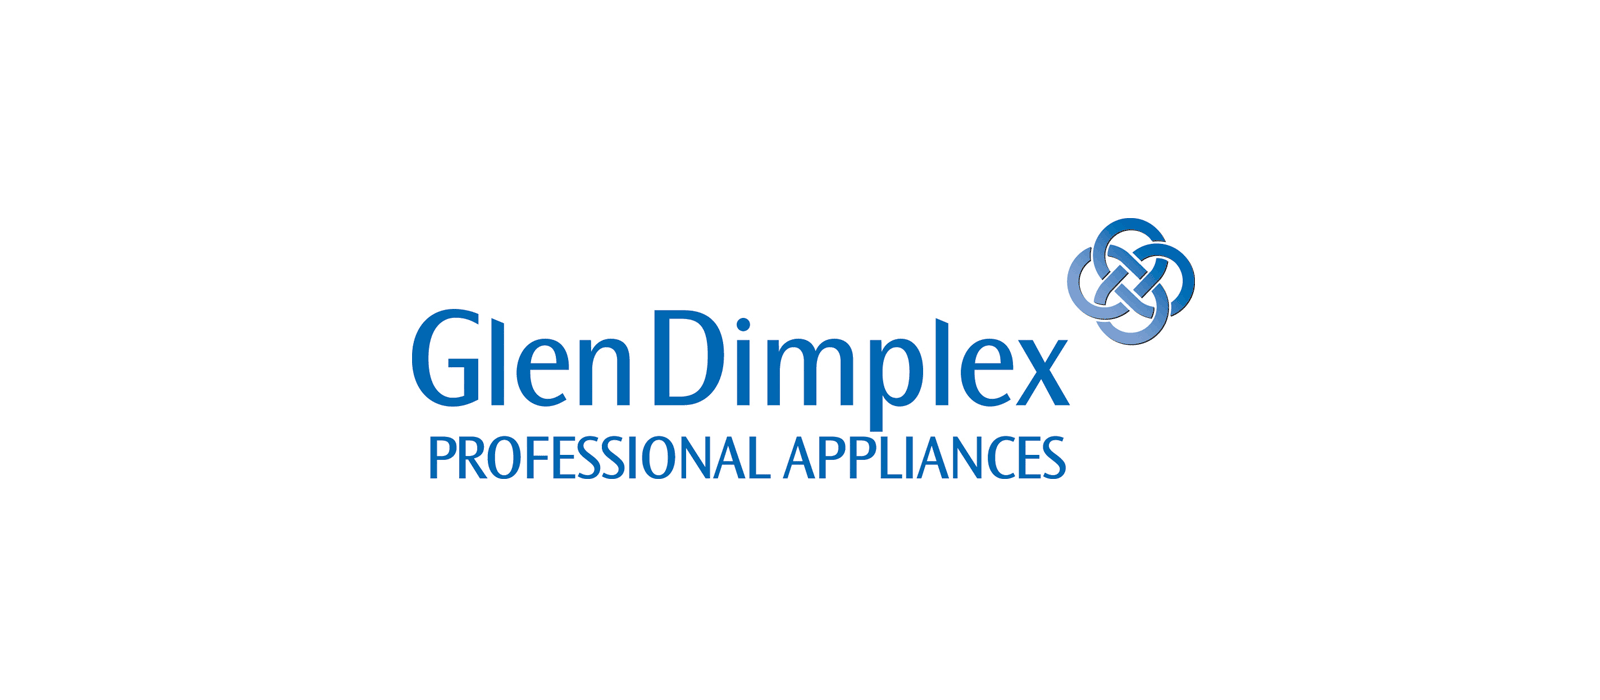 glen dimplex logo